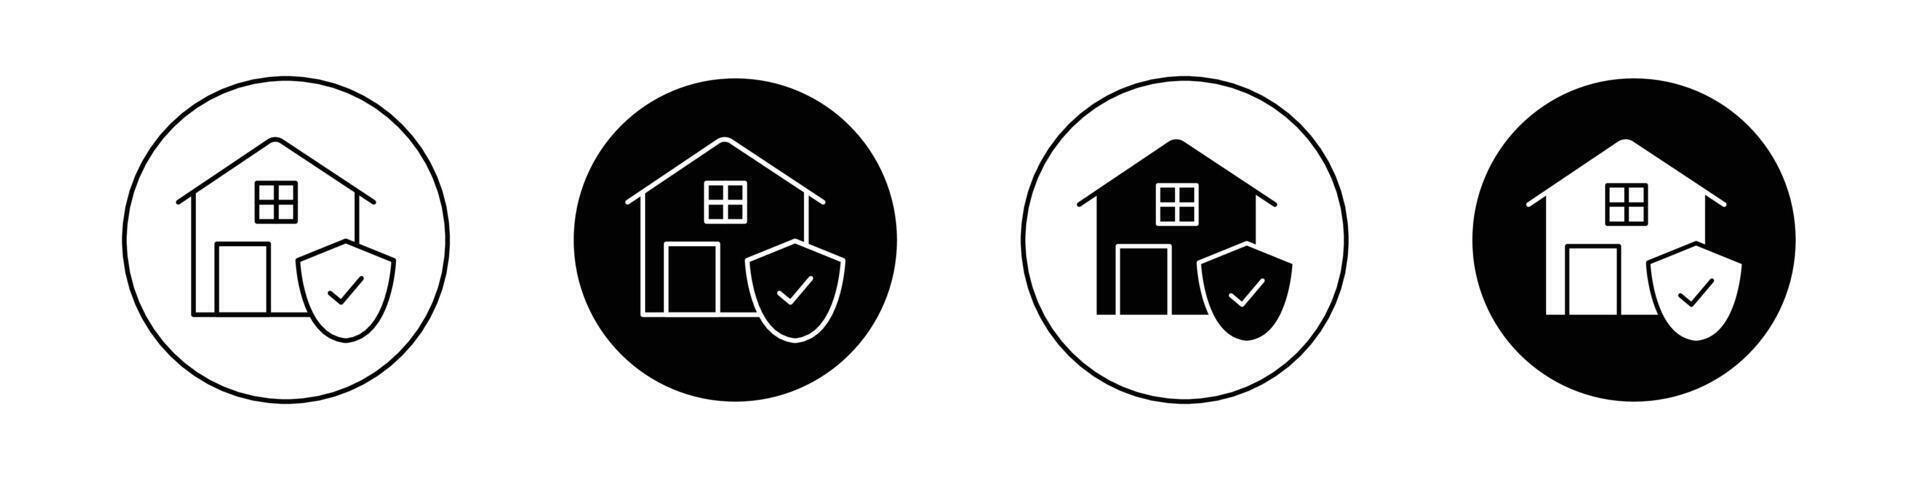 House insurance icon vector